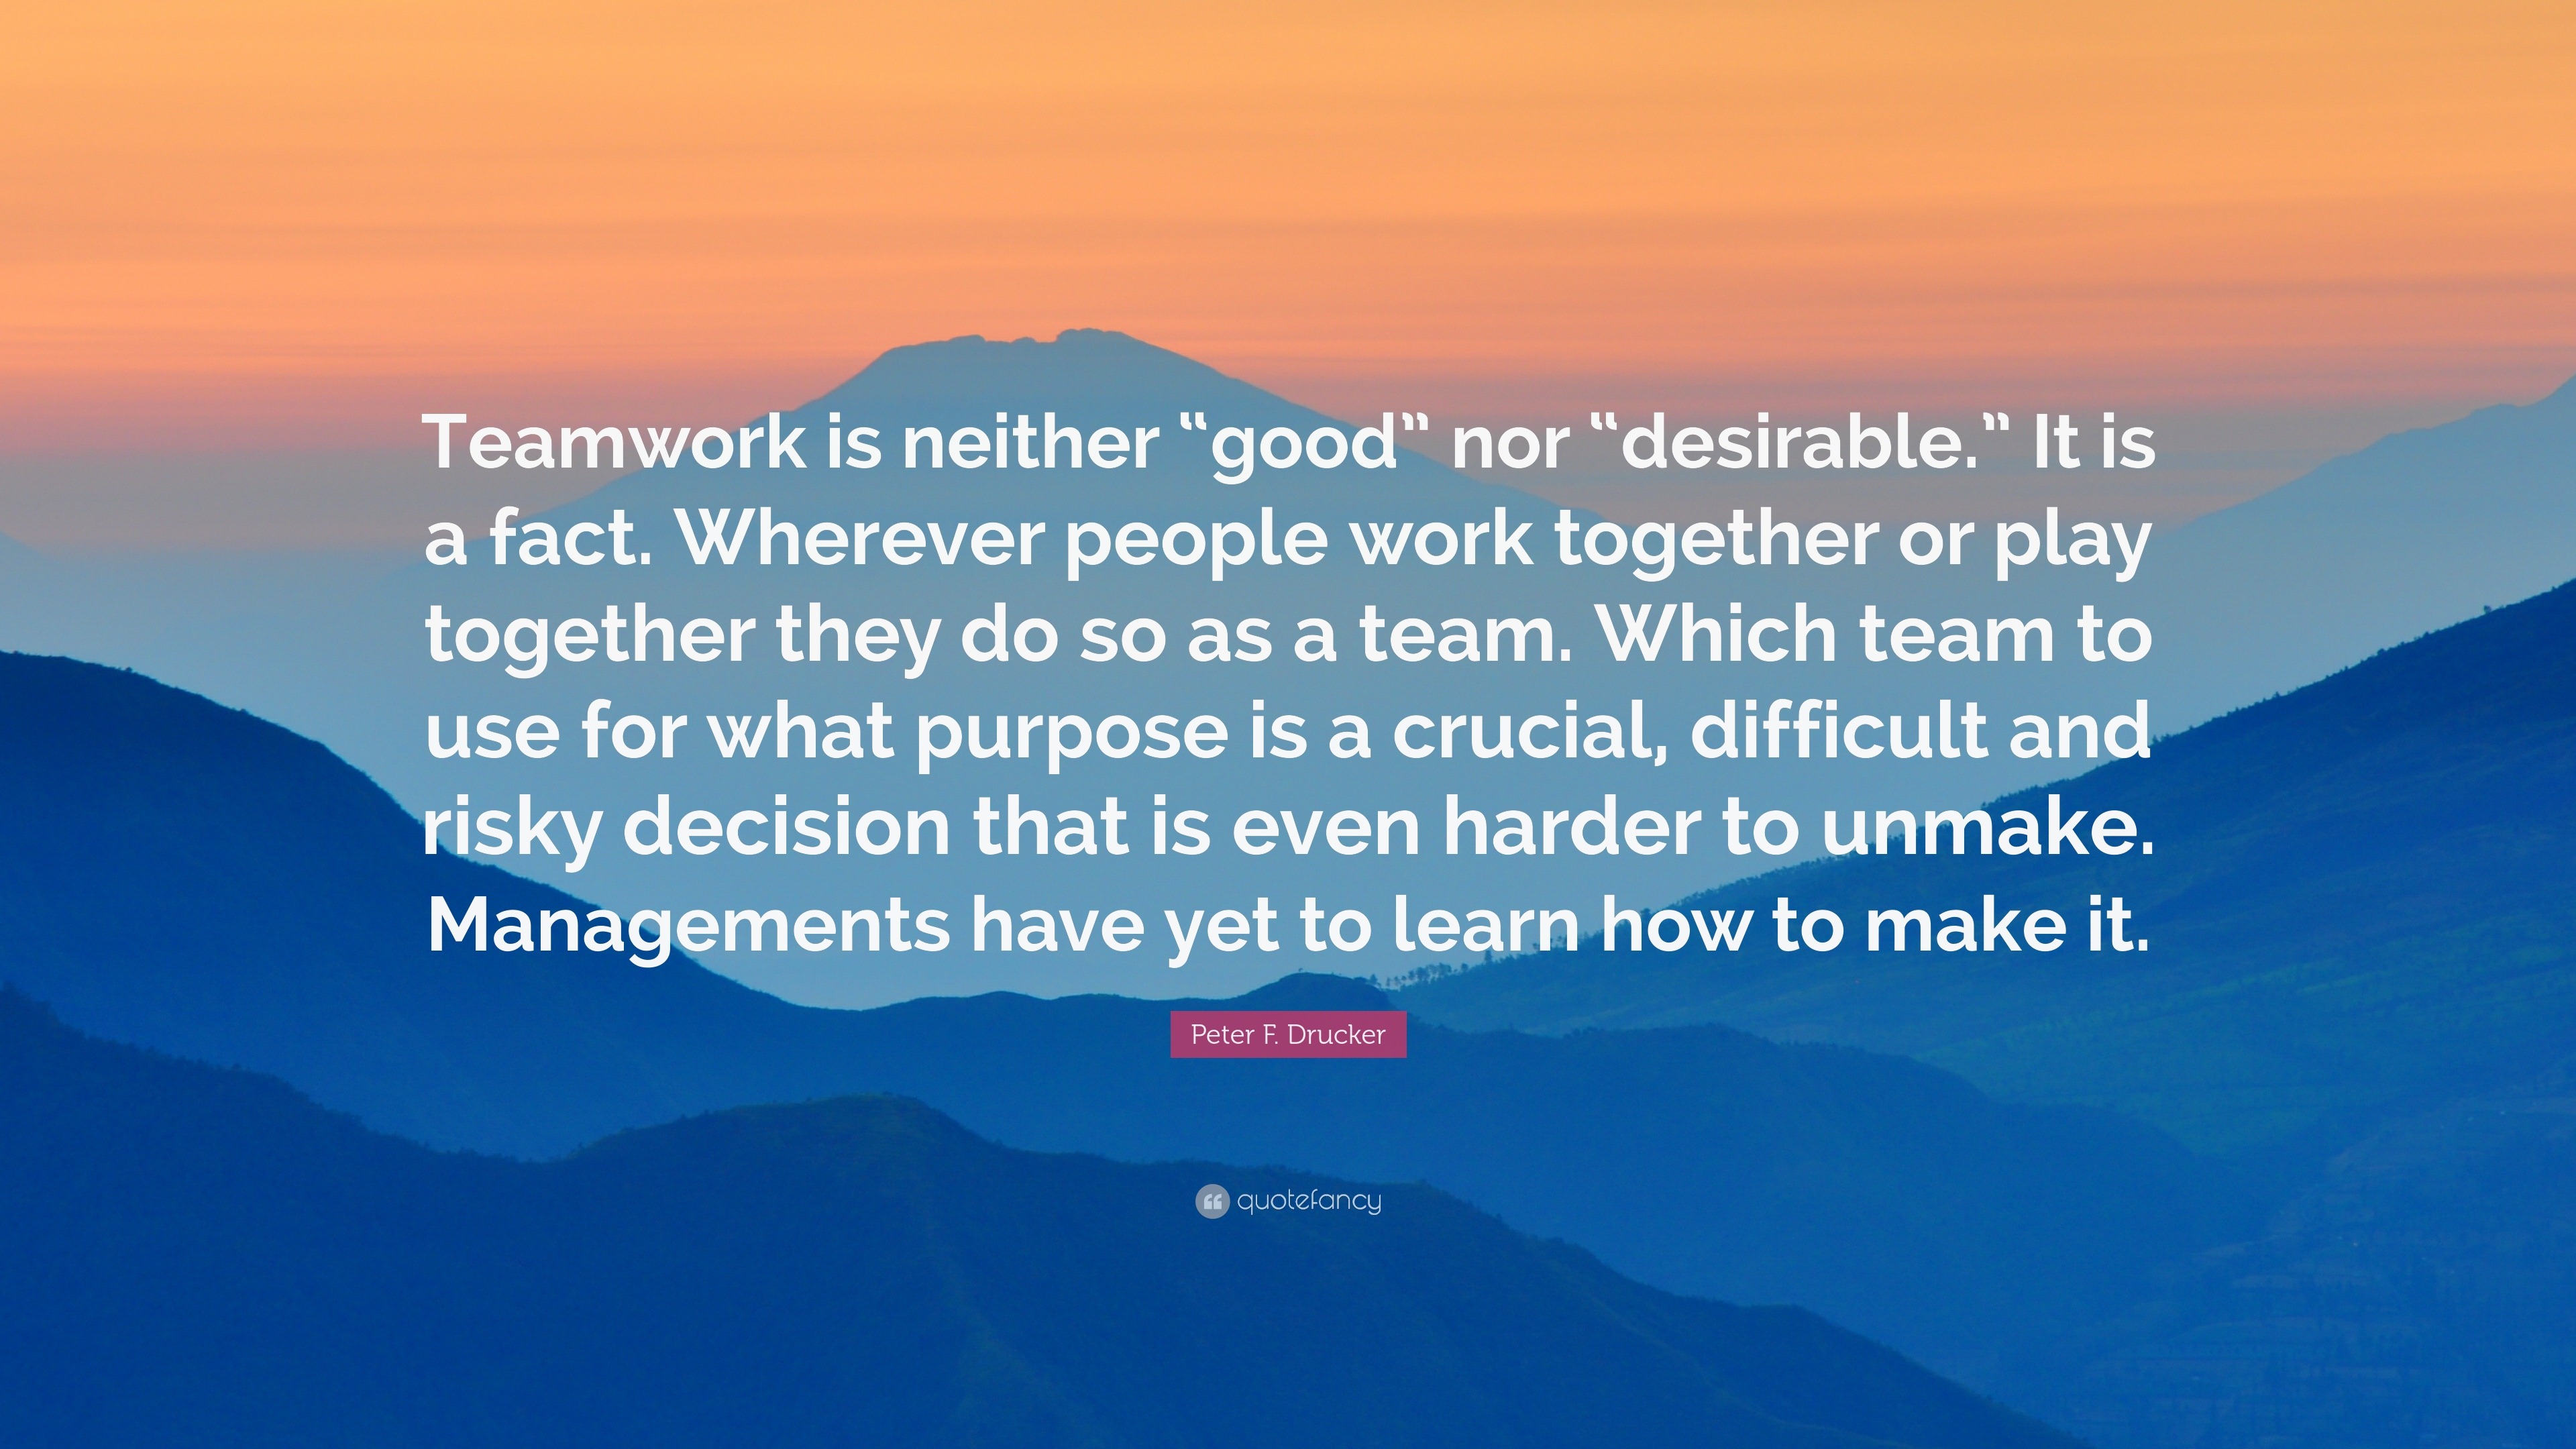 Peter F. Drucker Quote: “Teamwork is neither “good” nor “desirable.” It ...